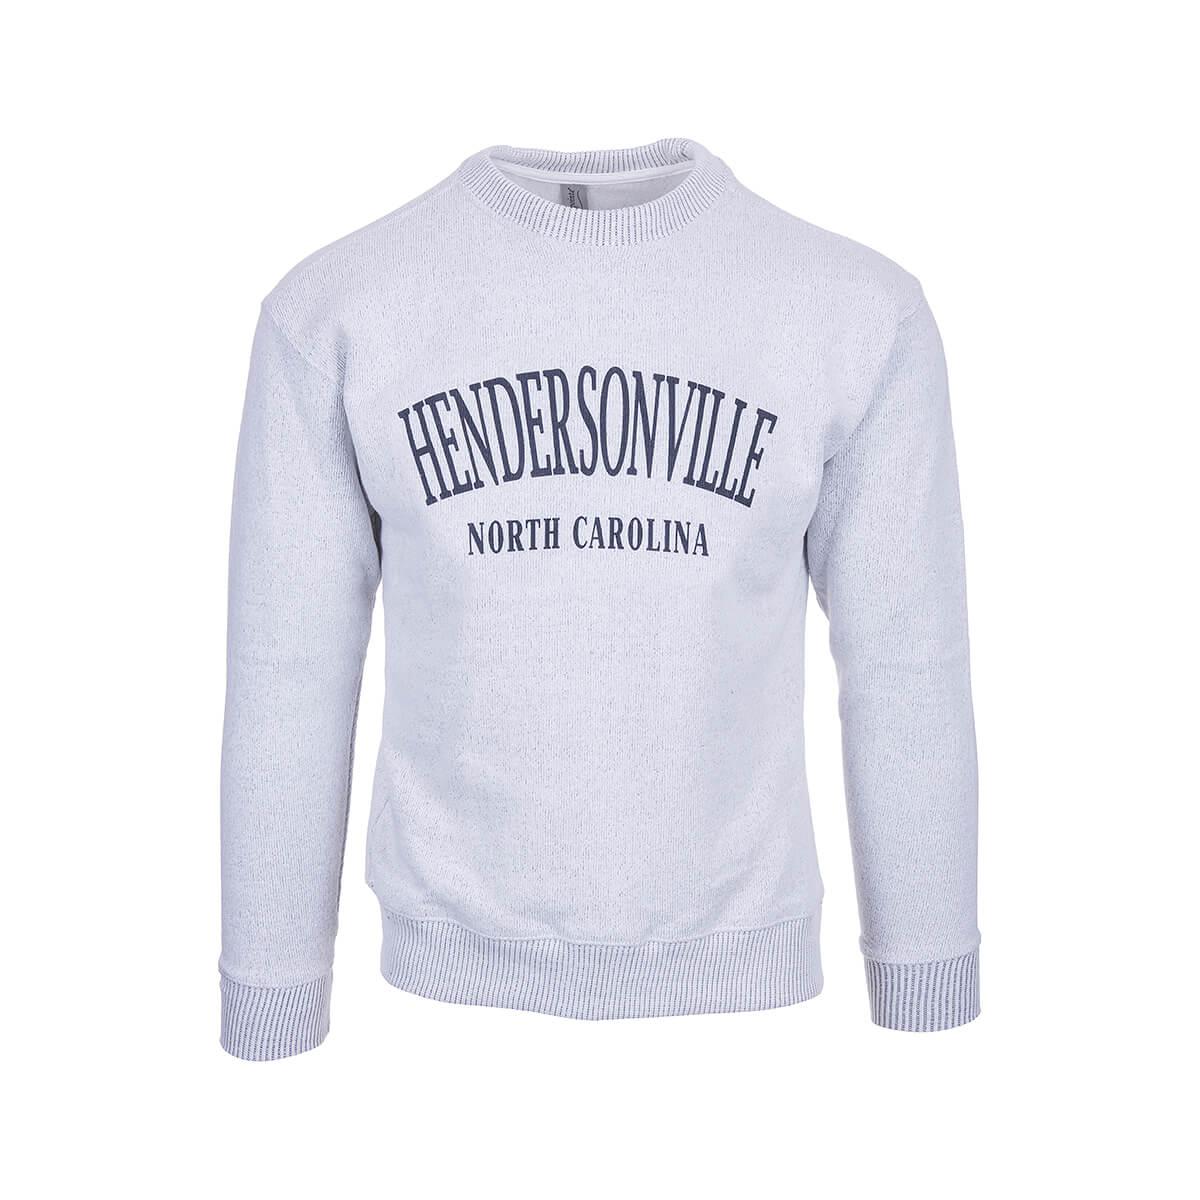  Hendersonville Nantucket Crew Neck Knit Sweatshirt